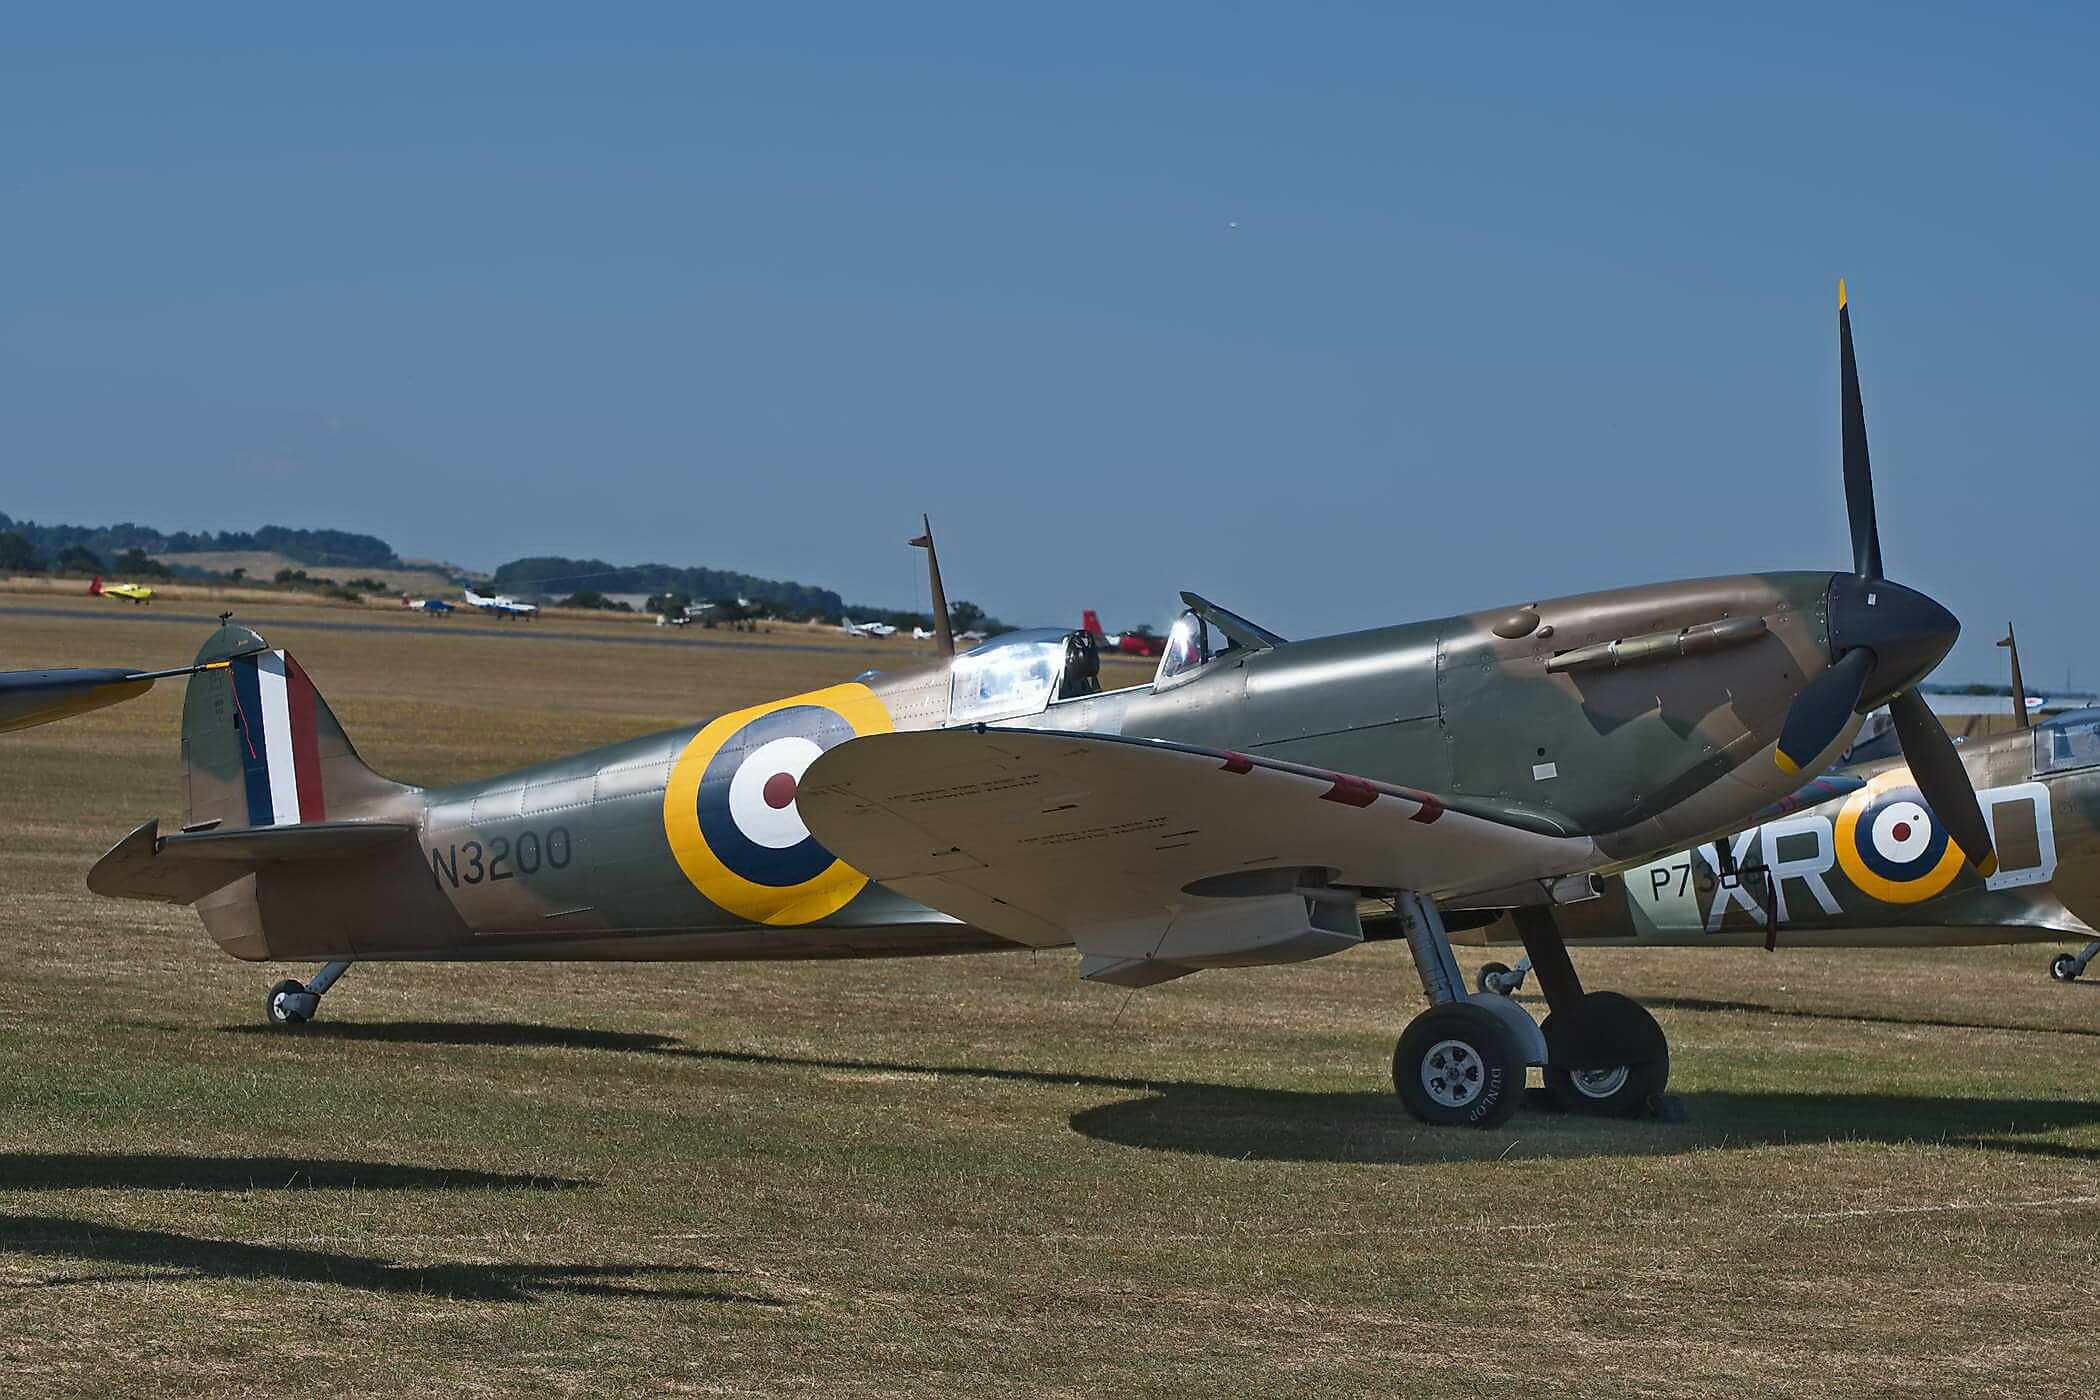 Spitfire Mk. 1a, N3200